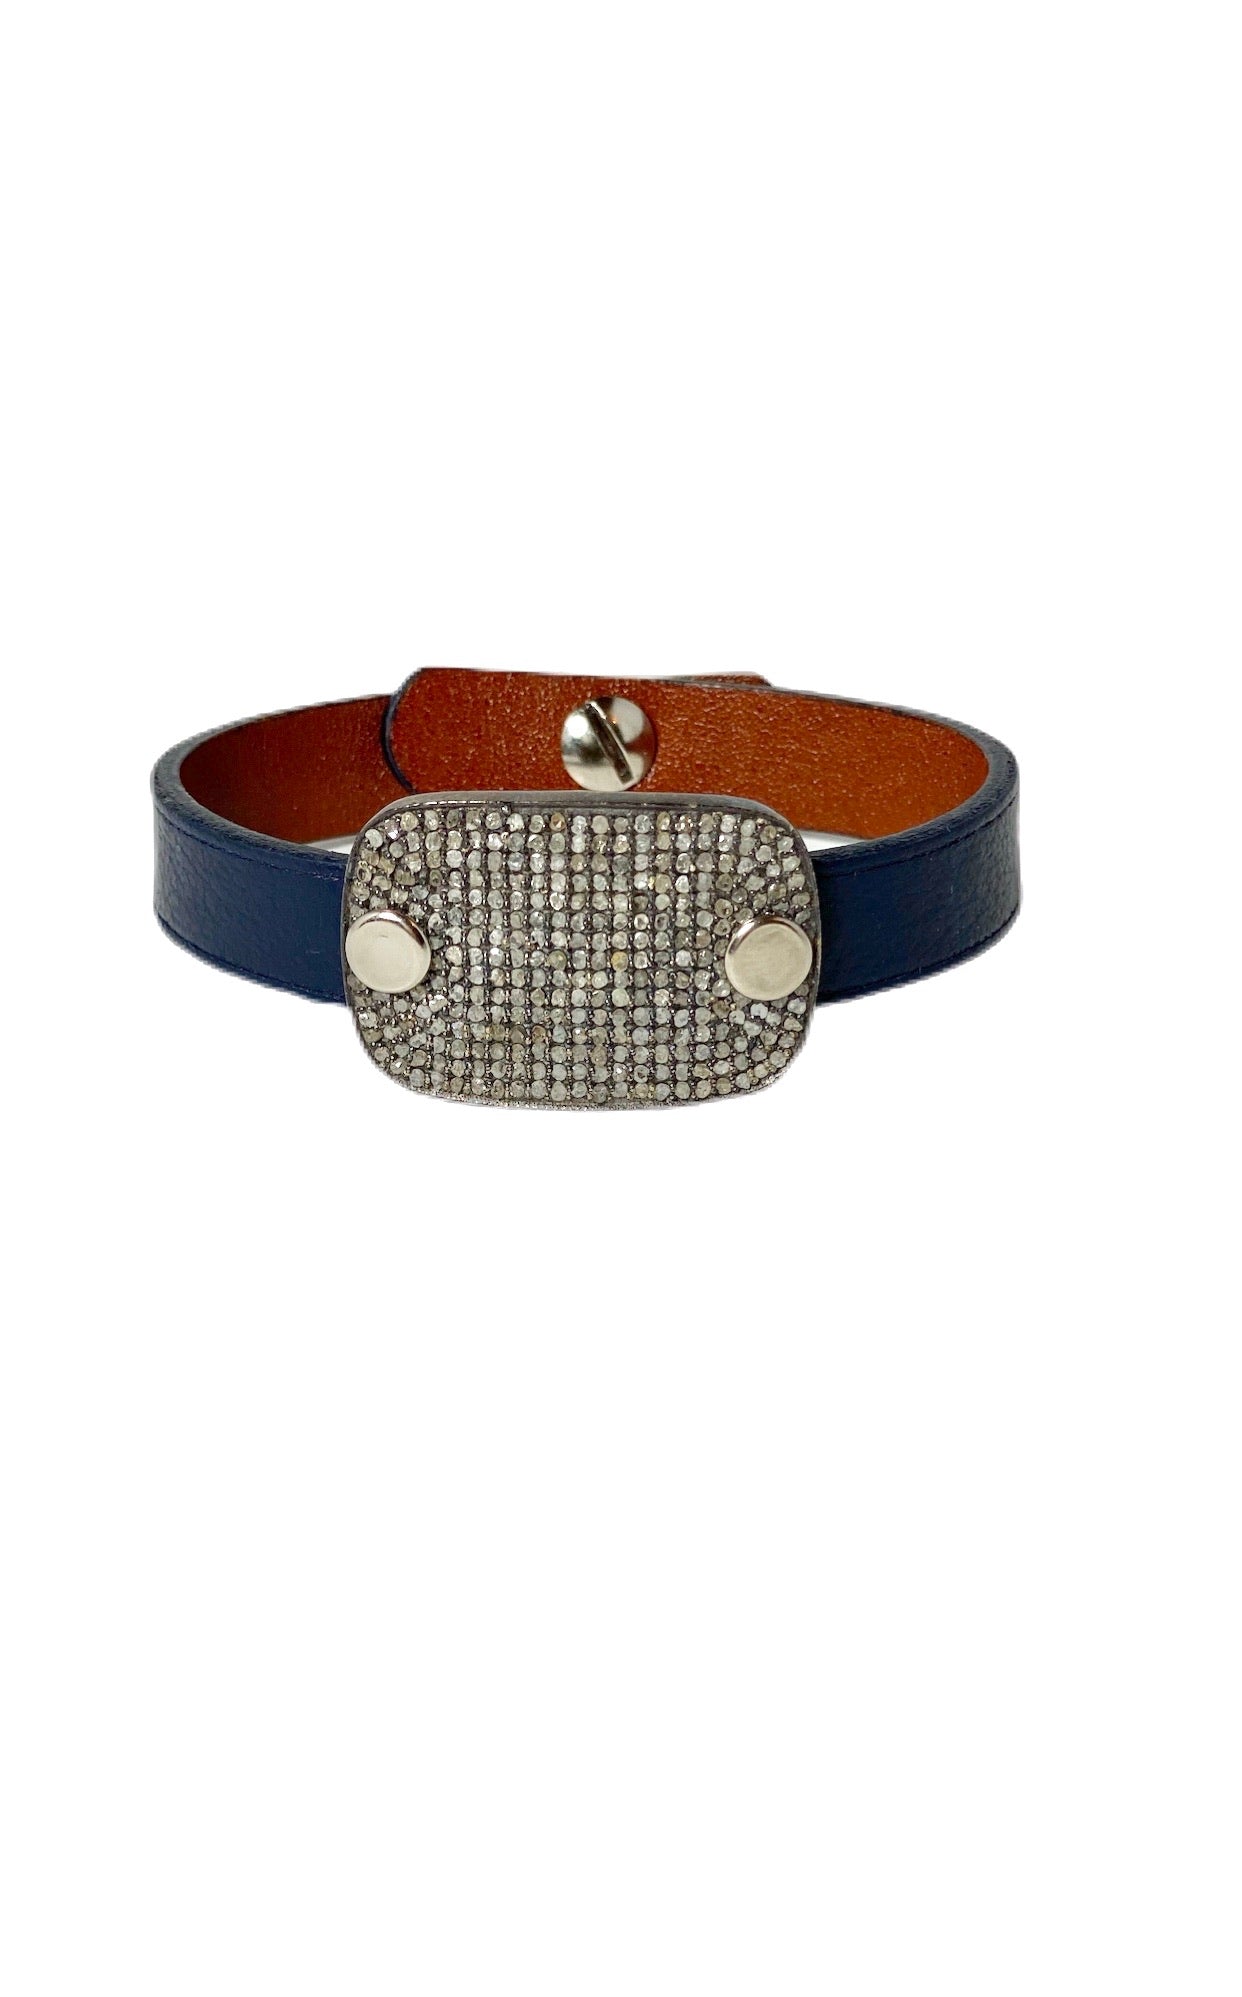 S.Row Designs Pave Diamond Leather Bracelet